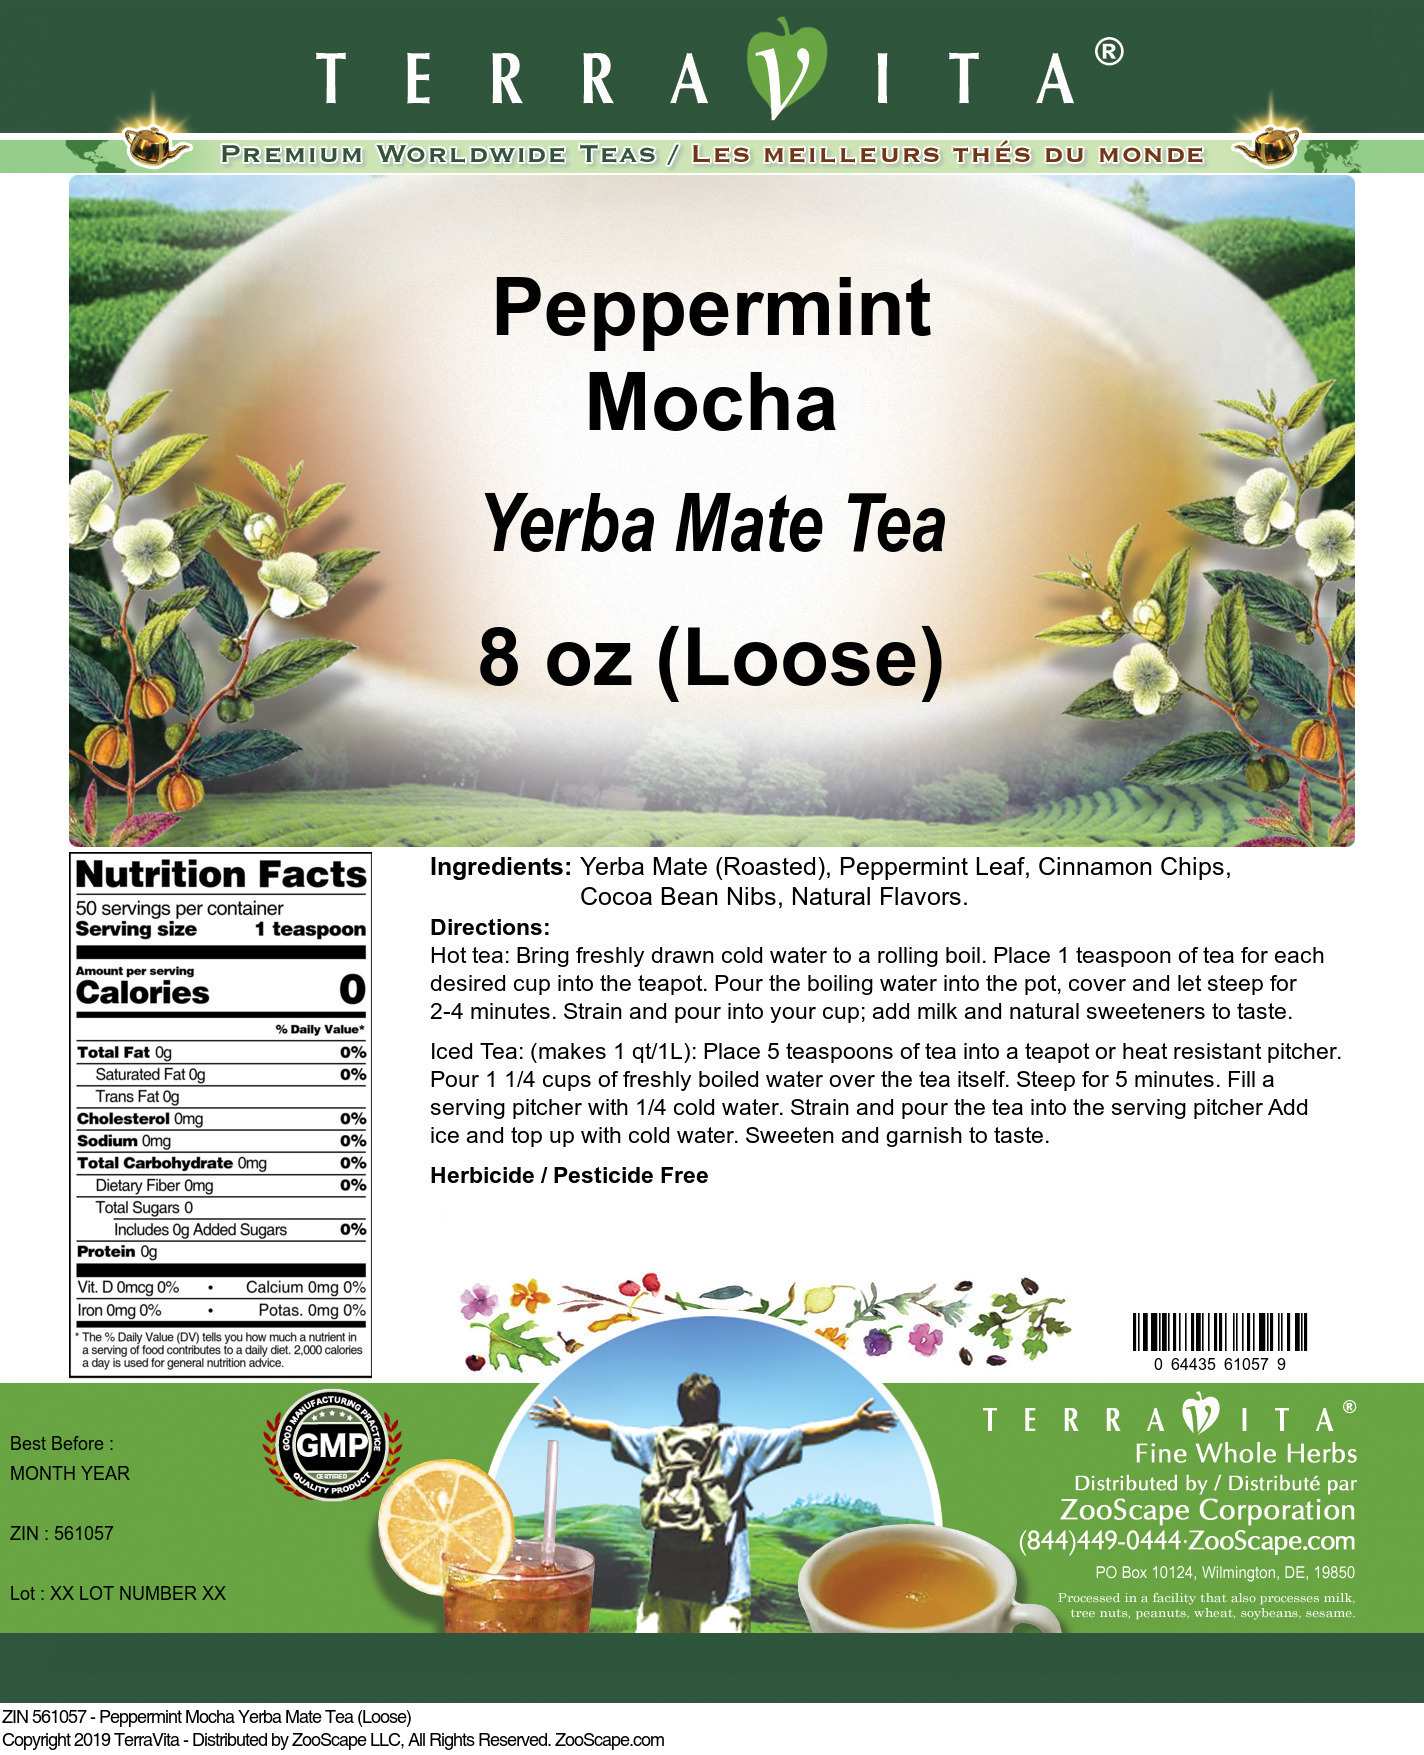 Peppermint Mocha Yerba Mate Tea (Loose) - Label